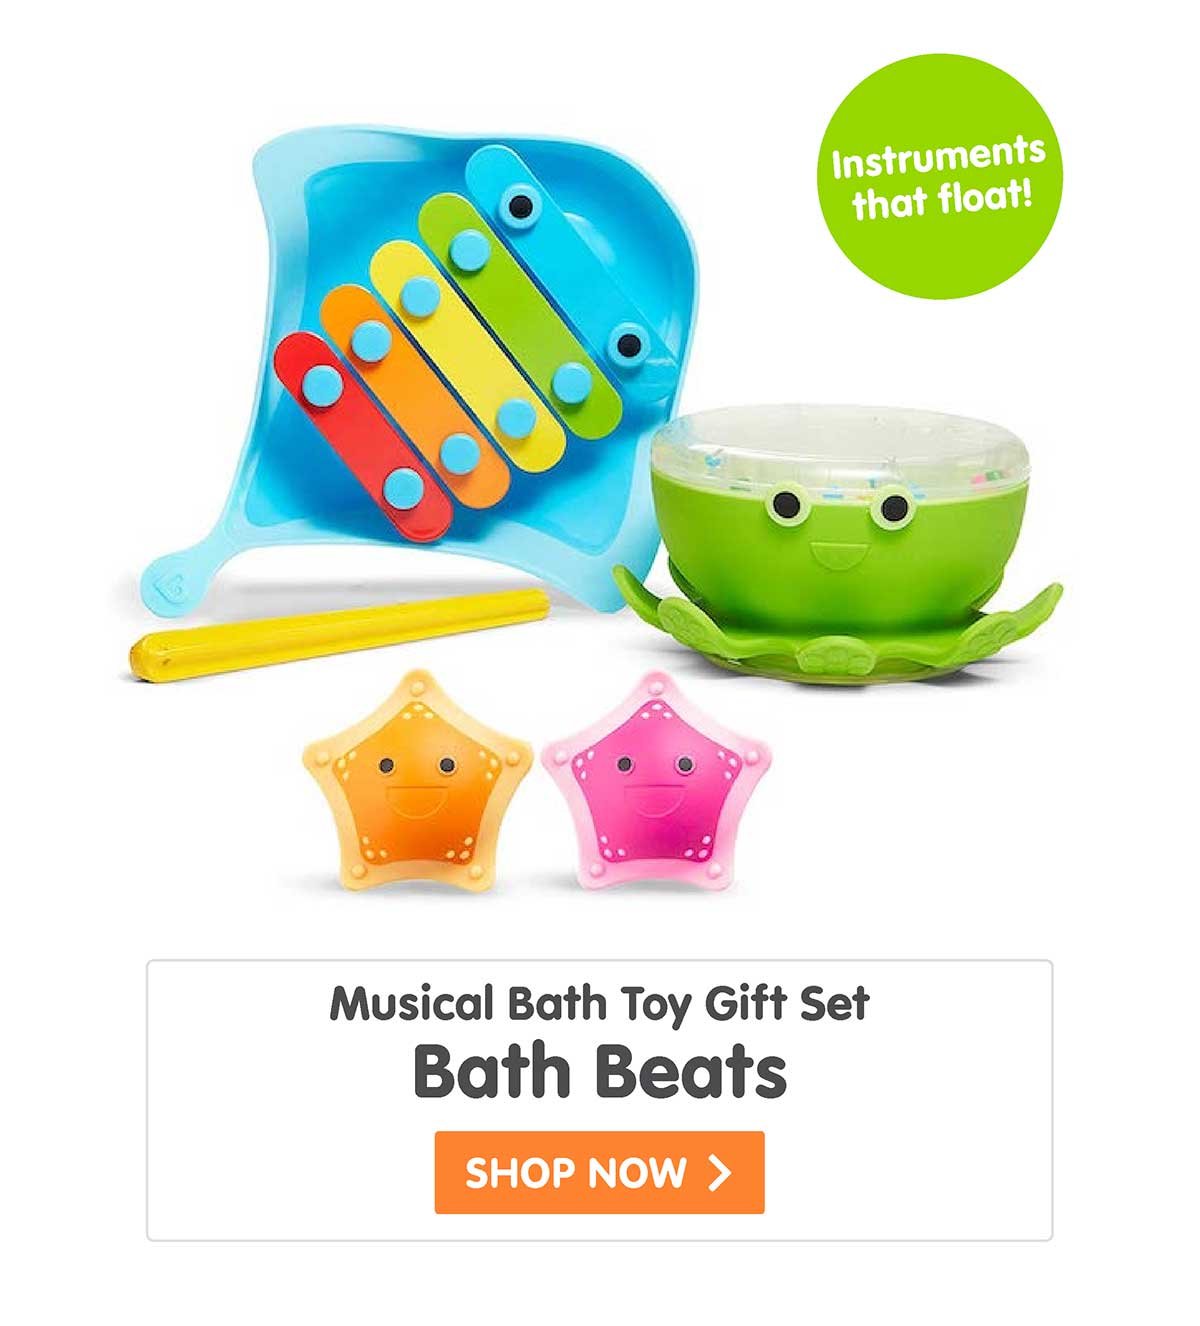 Bath Beats Musical Bath Toy Gift Set